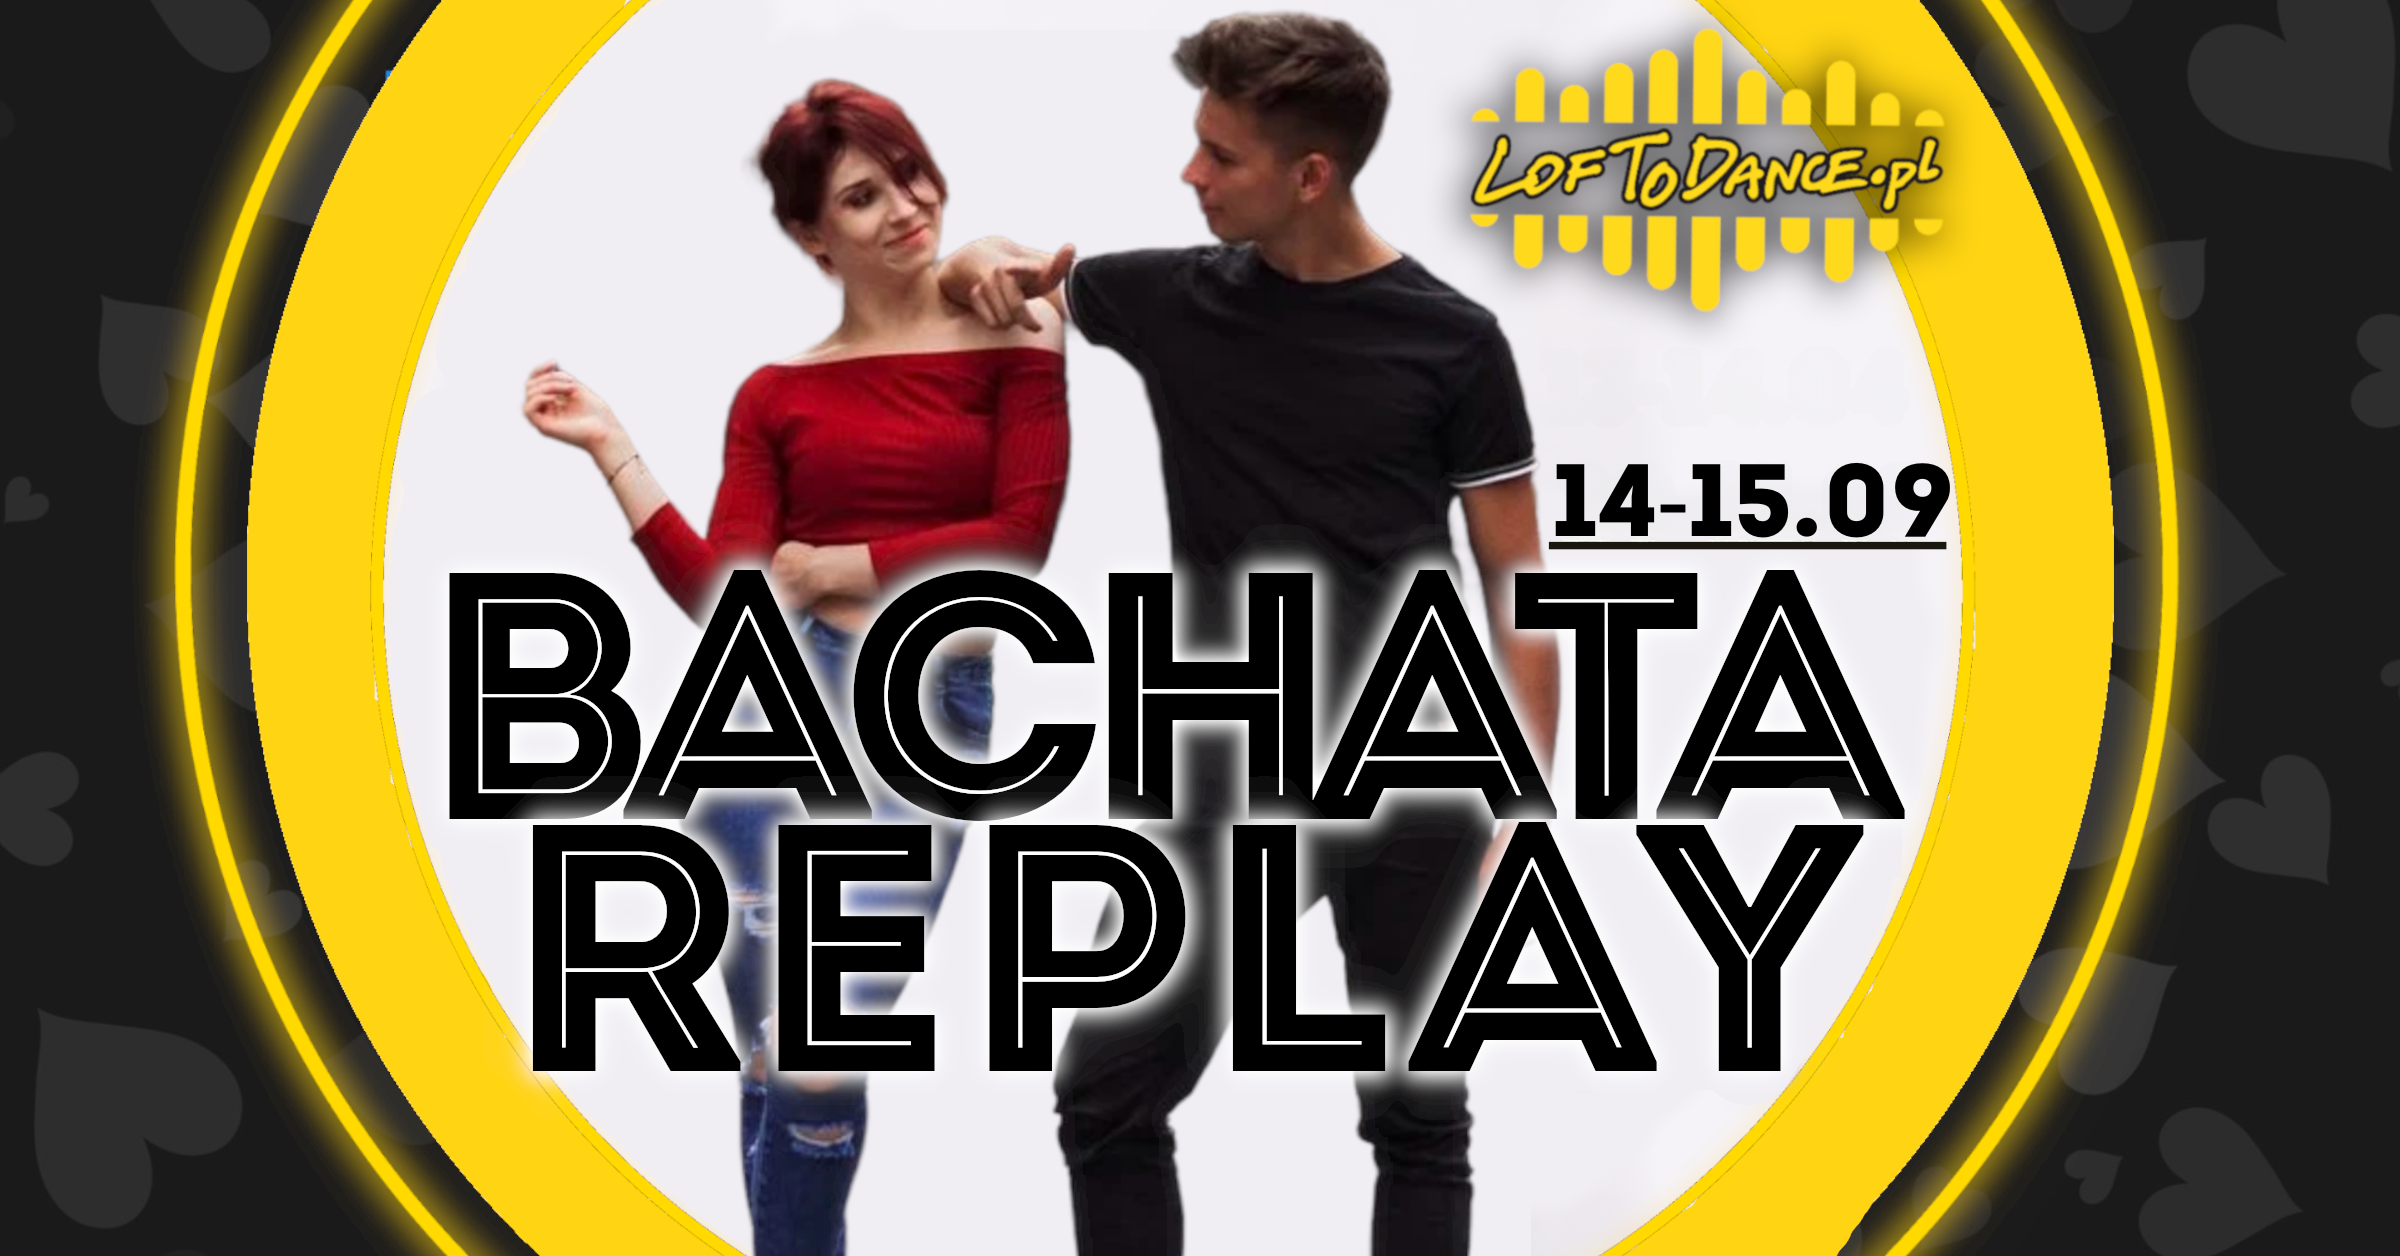 Bachata Replay - sklep Loftodance